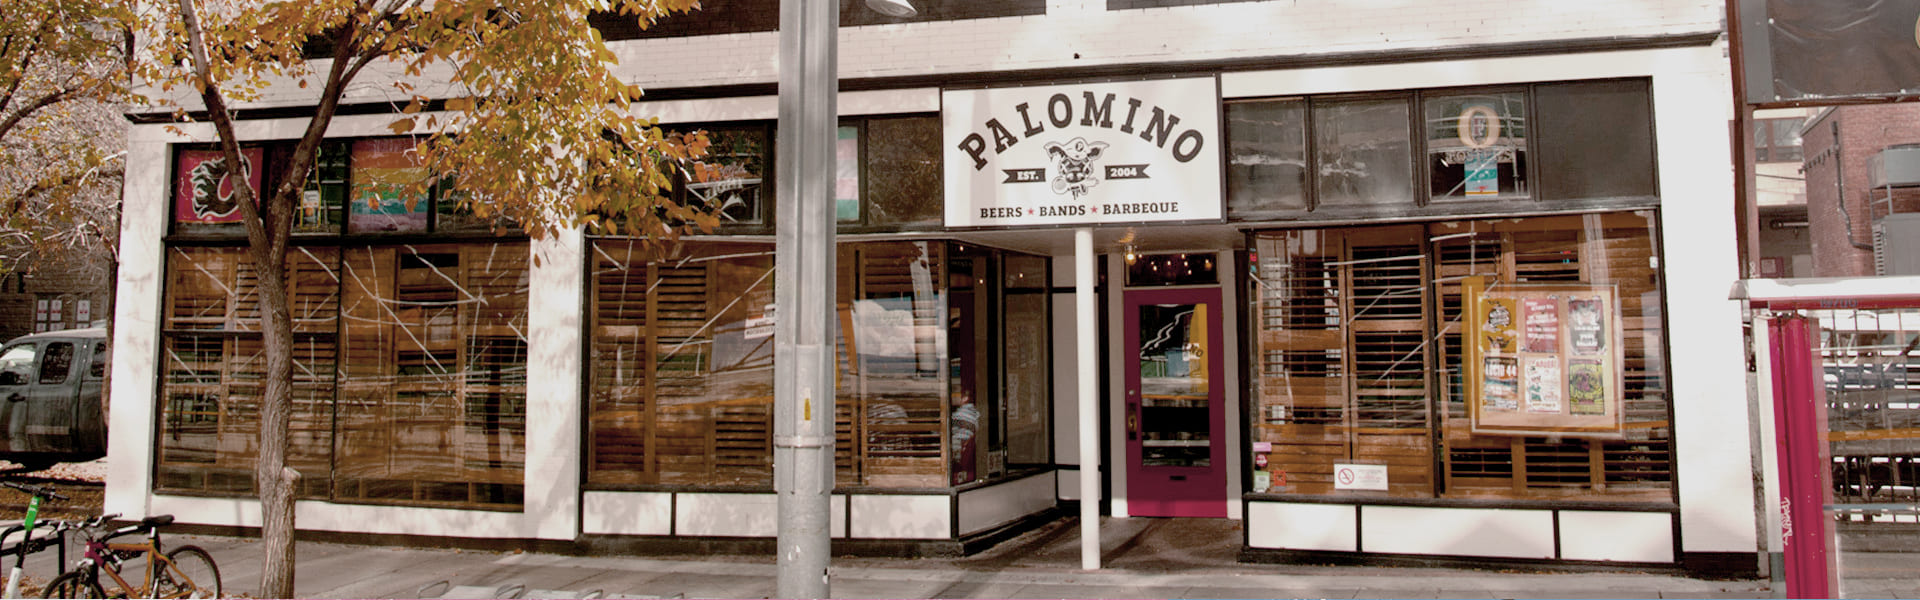 palomino-menu-banner-04